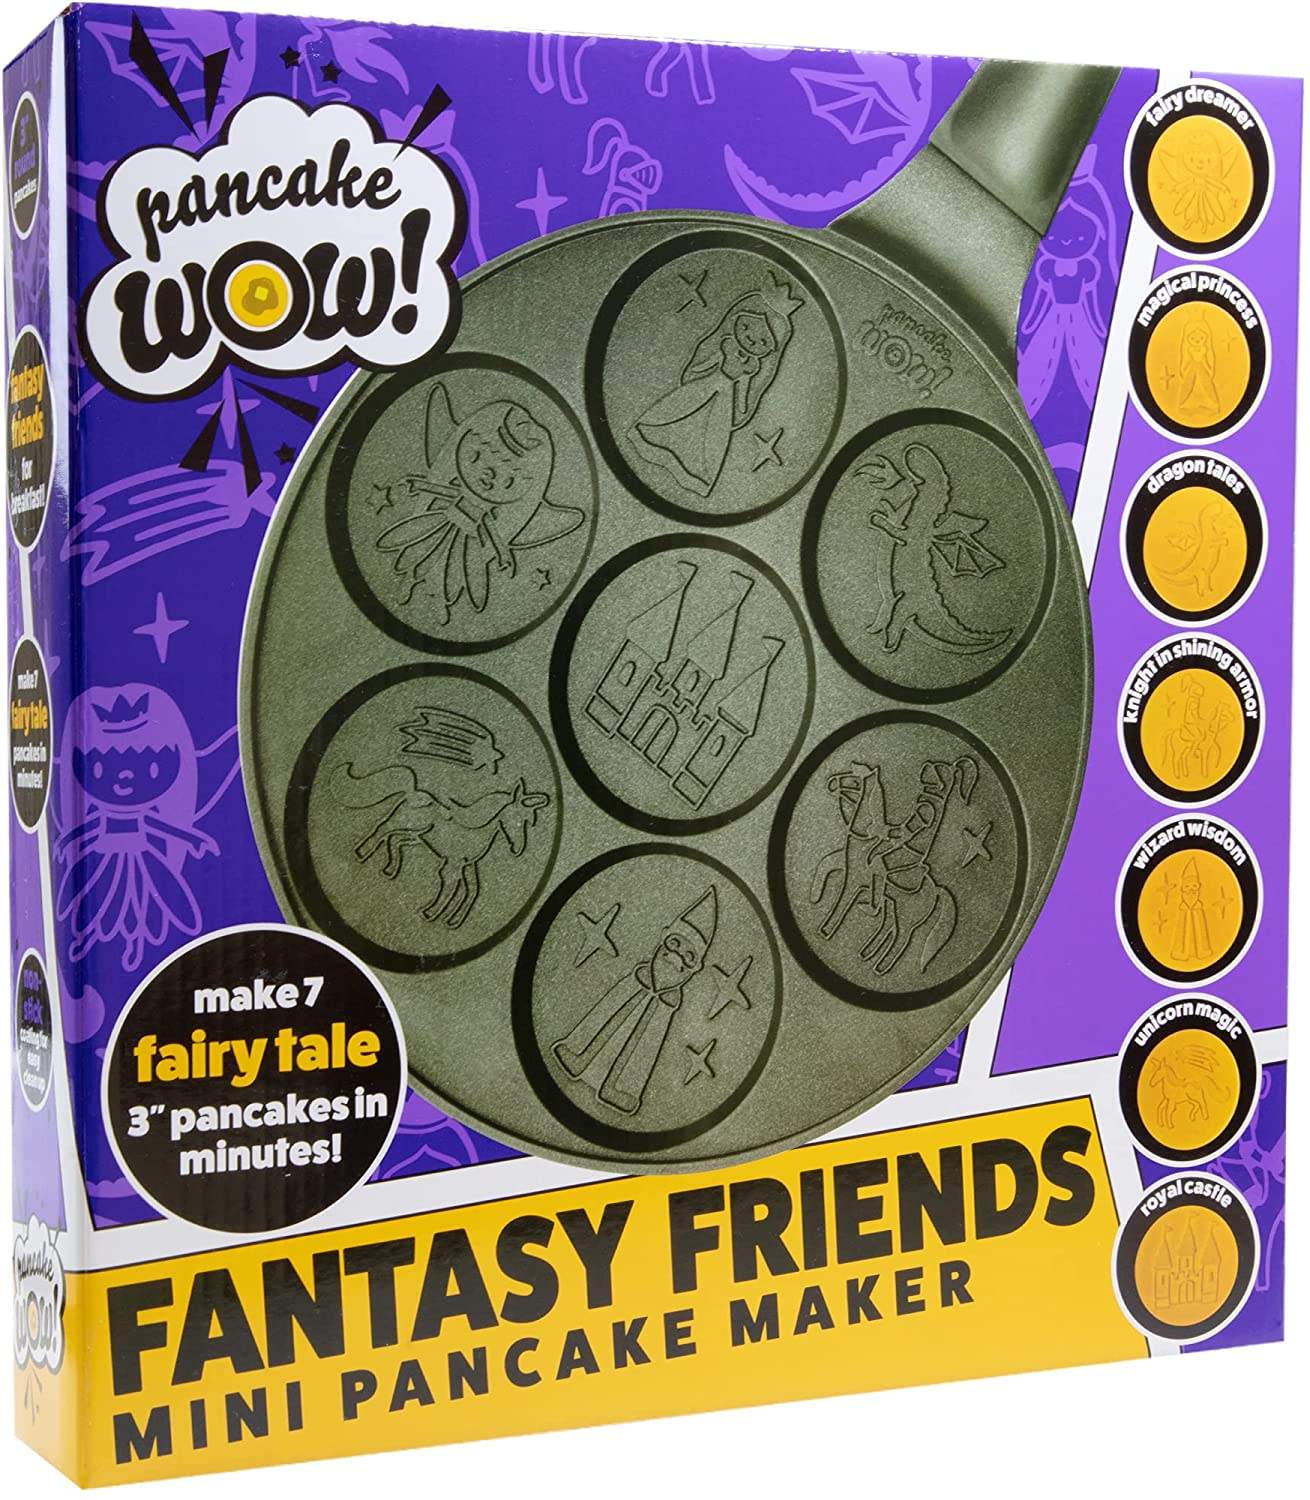 Fantasy Friends-Waffle Wow!-